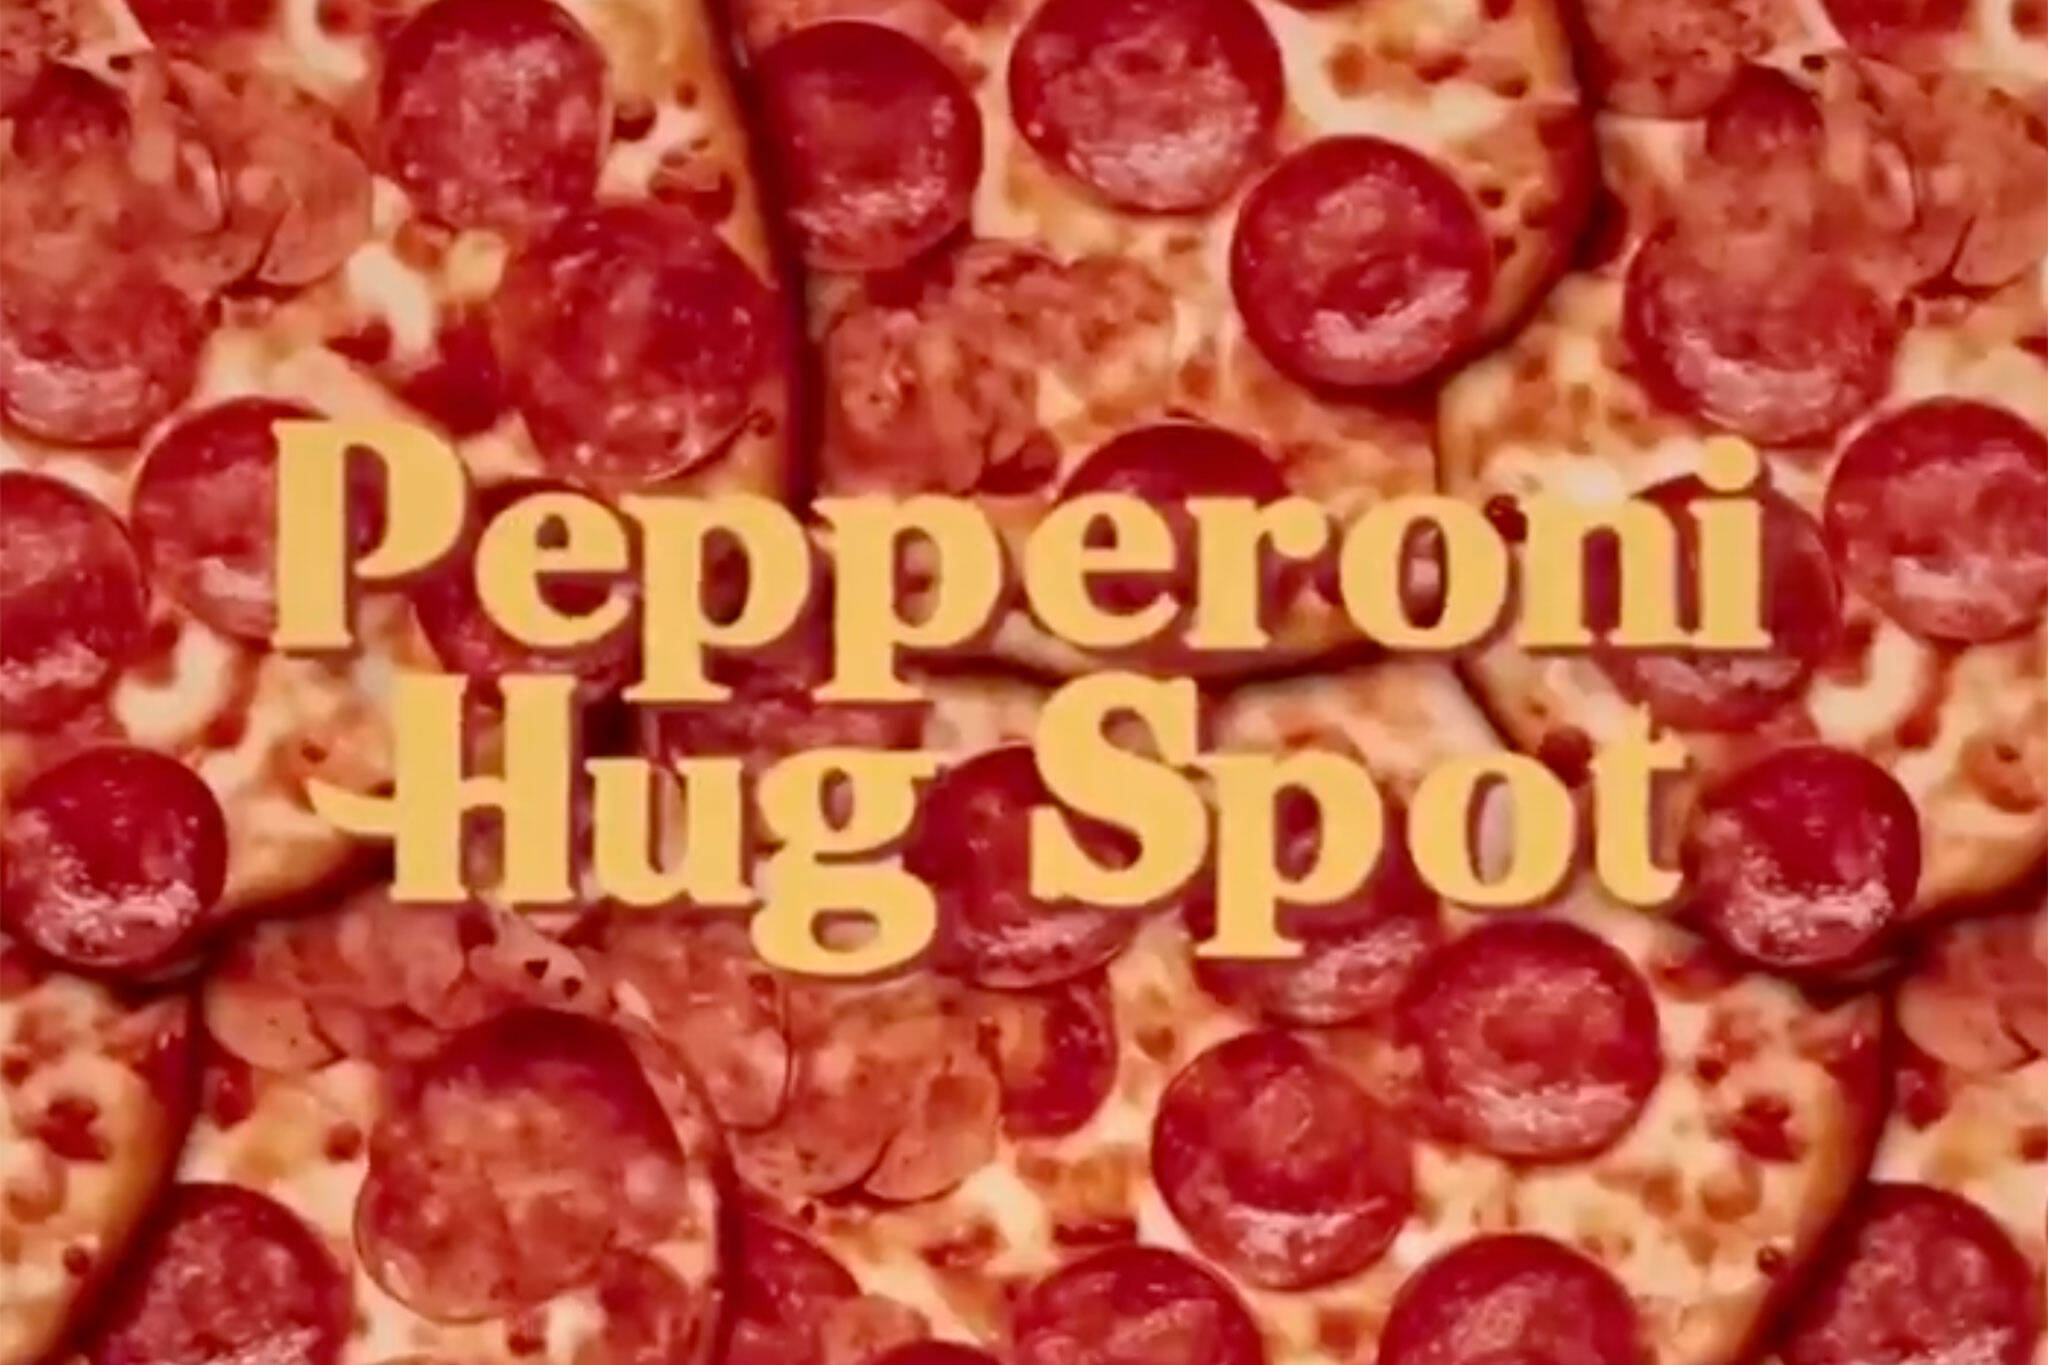 pepperoni hug spot